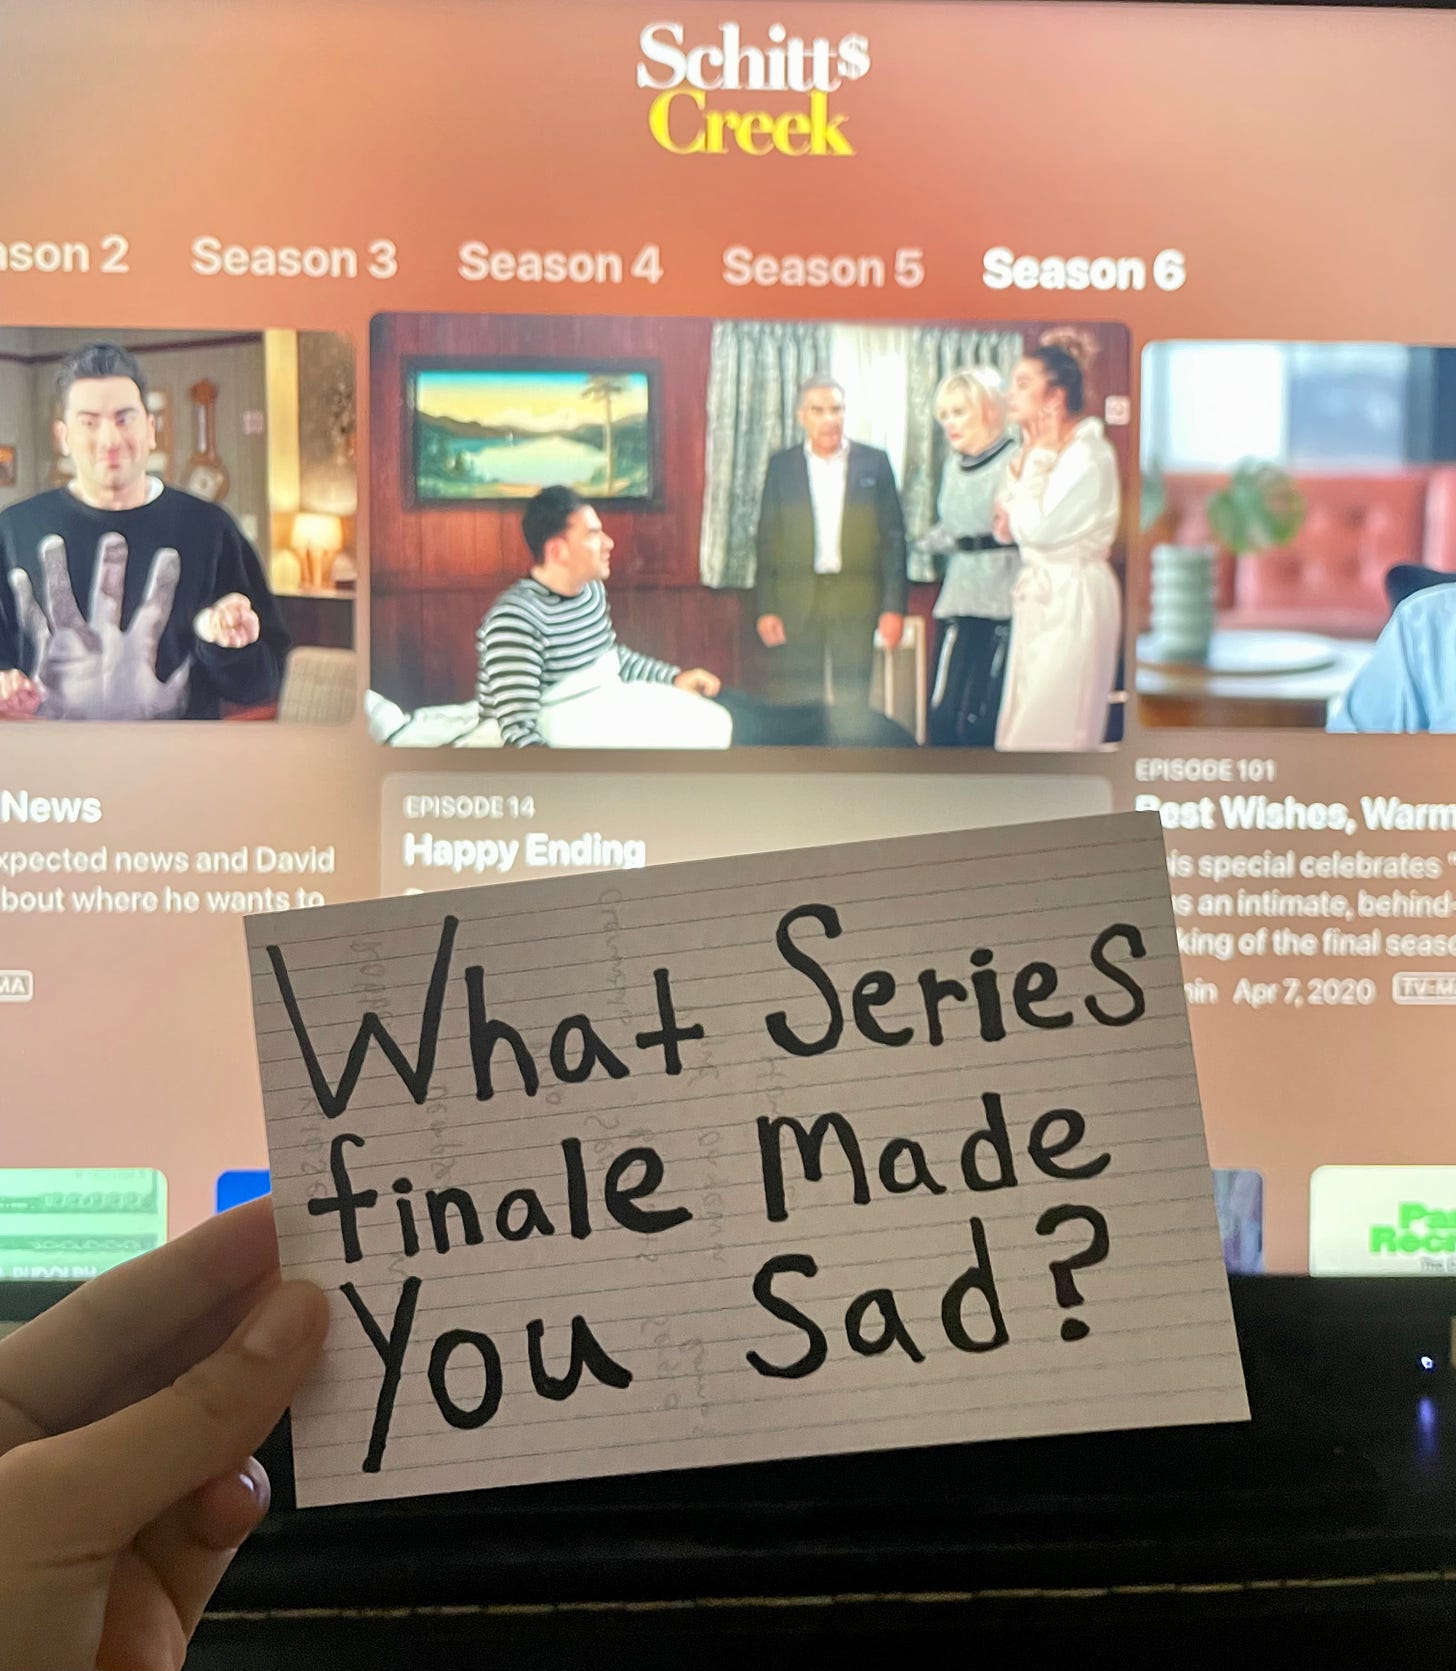 Series finale